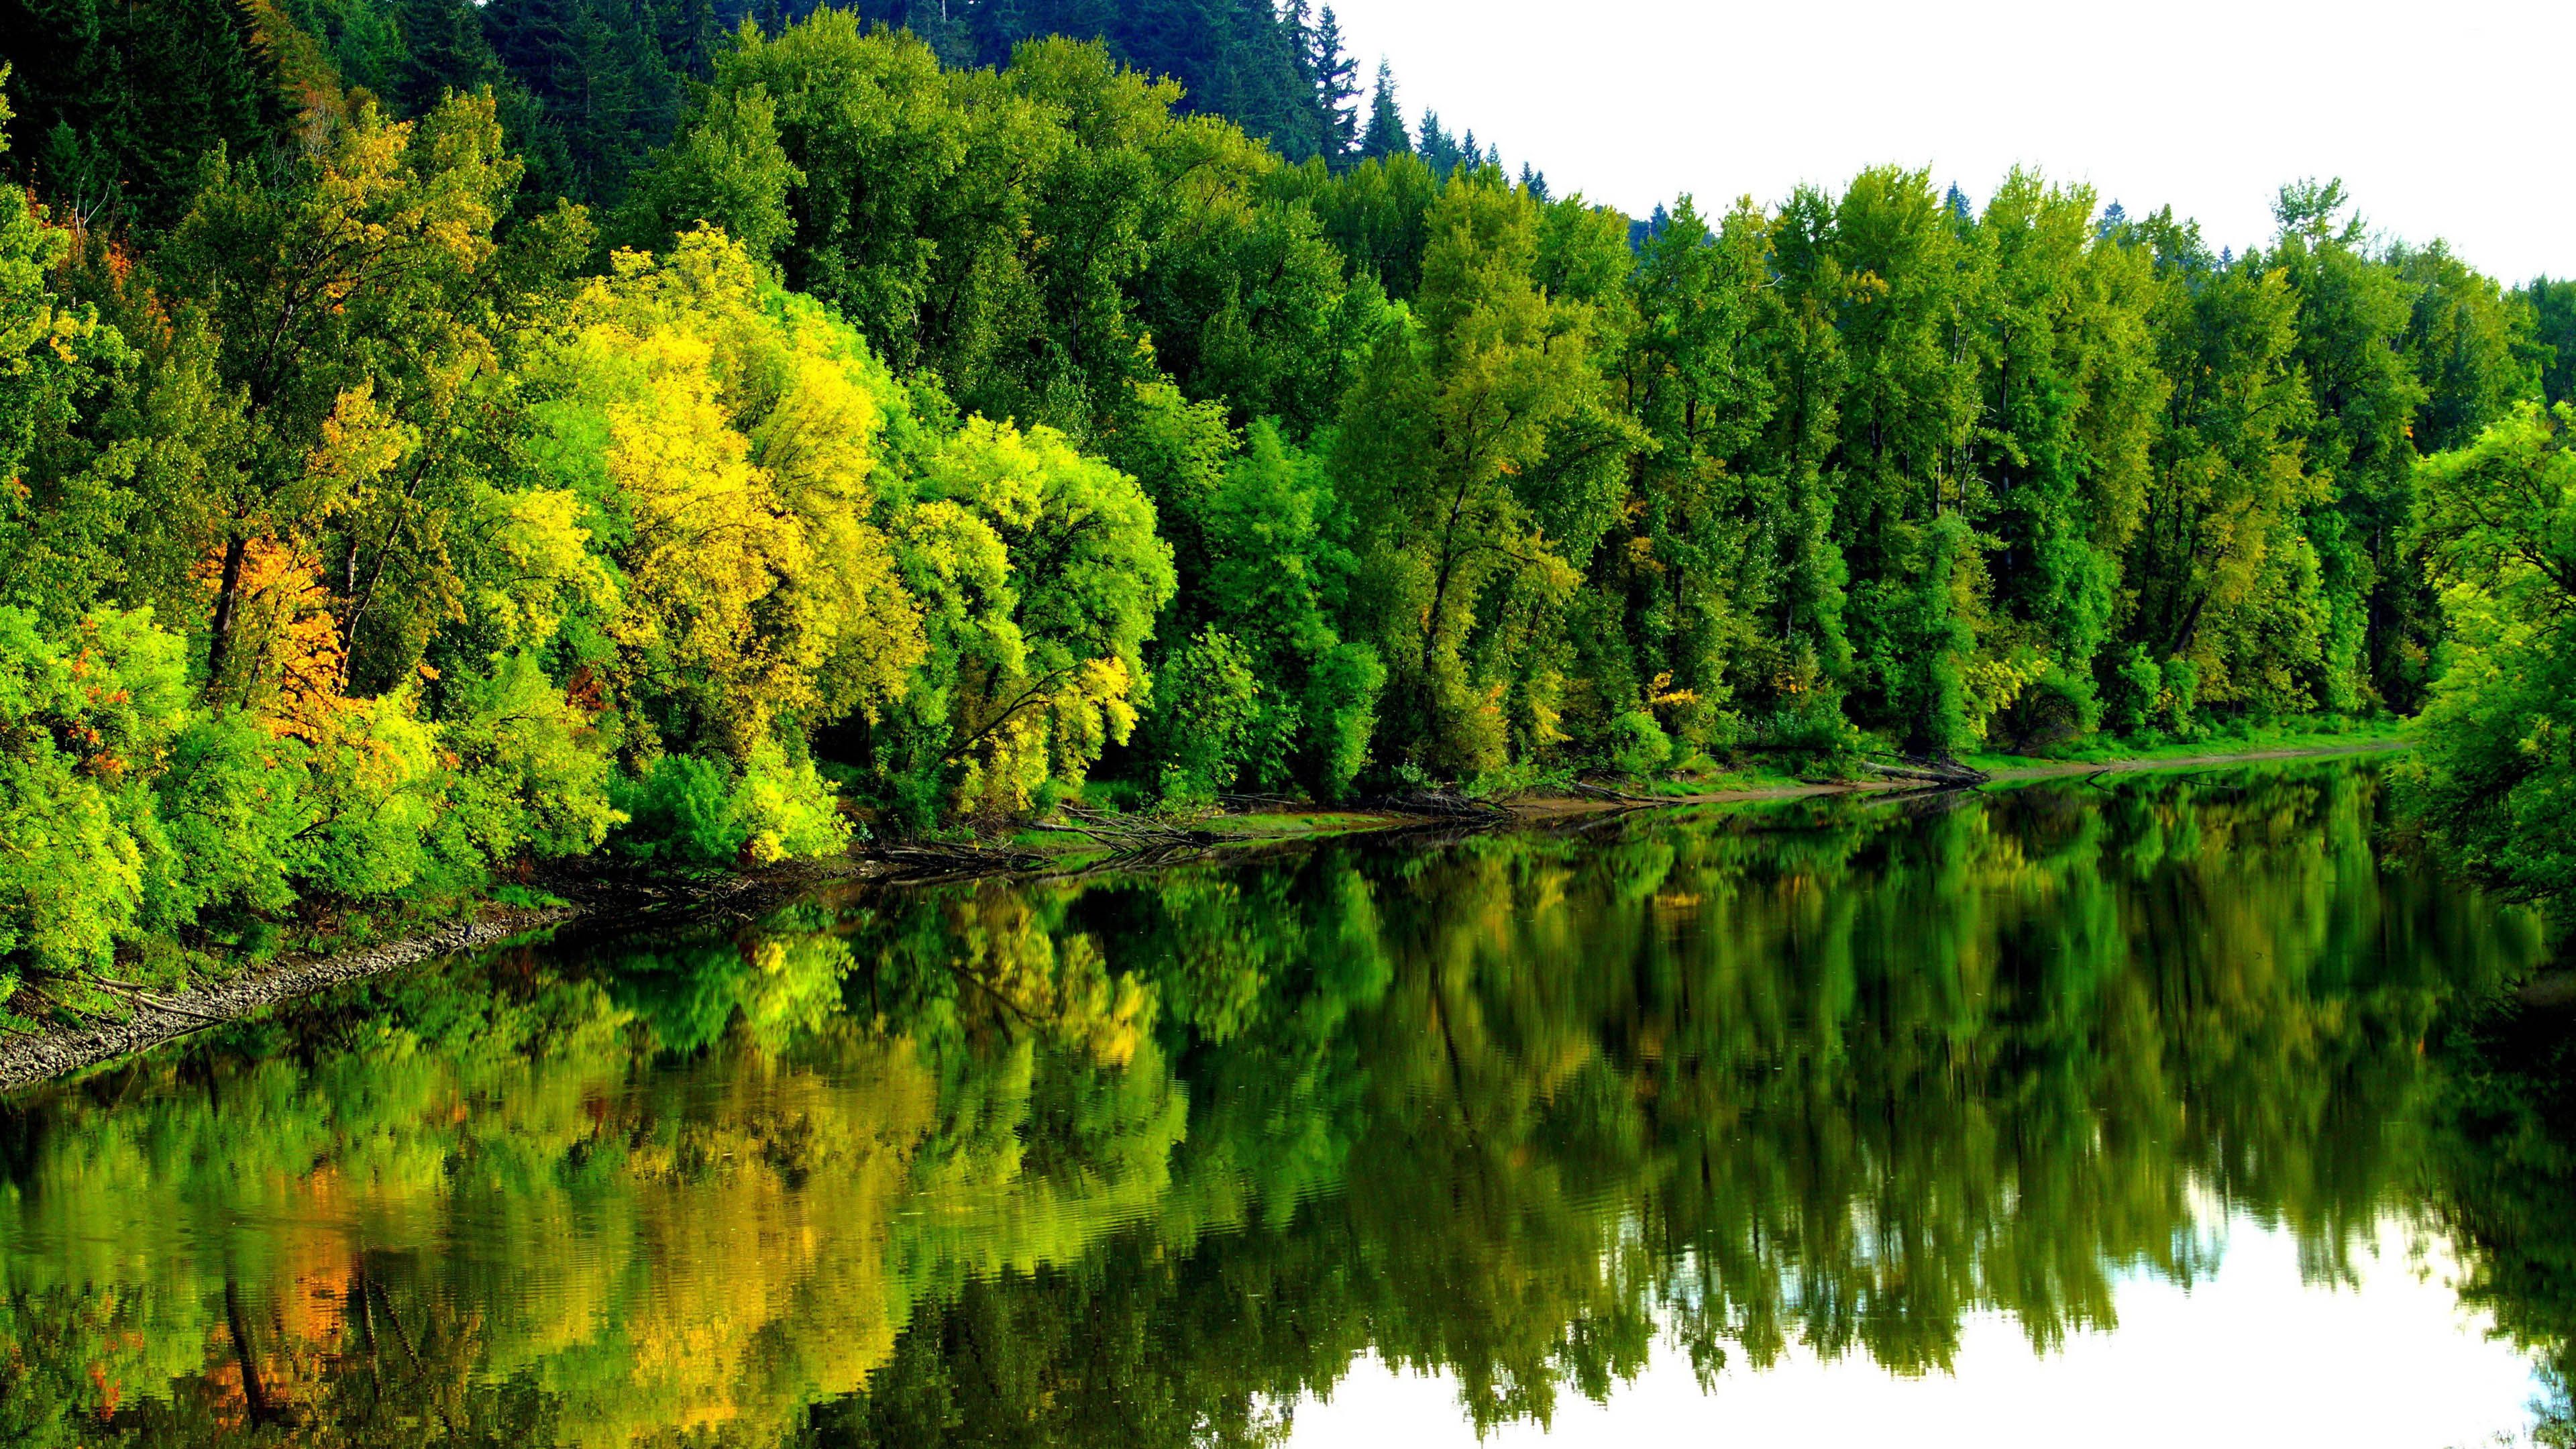 عکس جالب انعکاس درختان جنگل درون رودخانه زلال